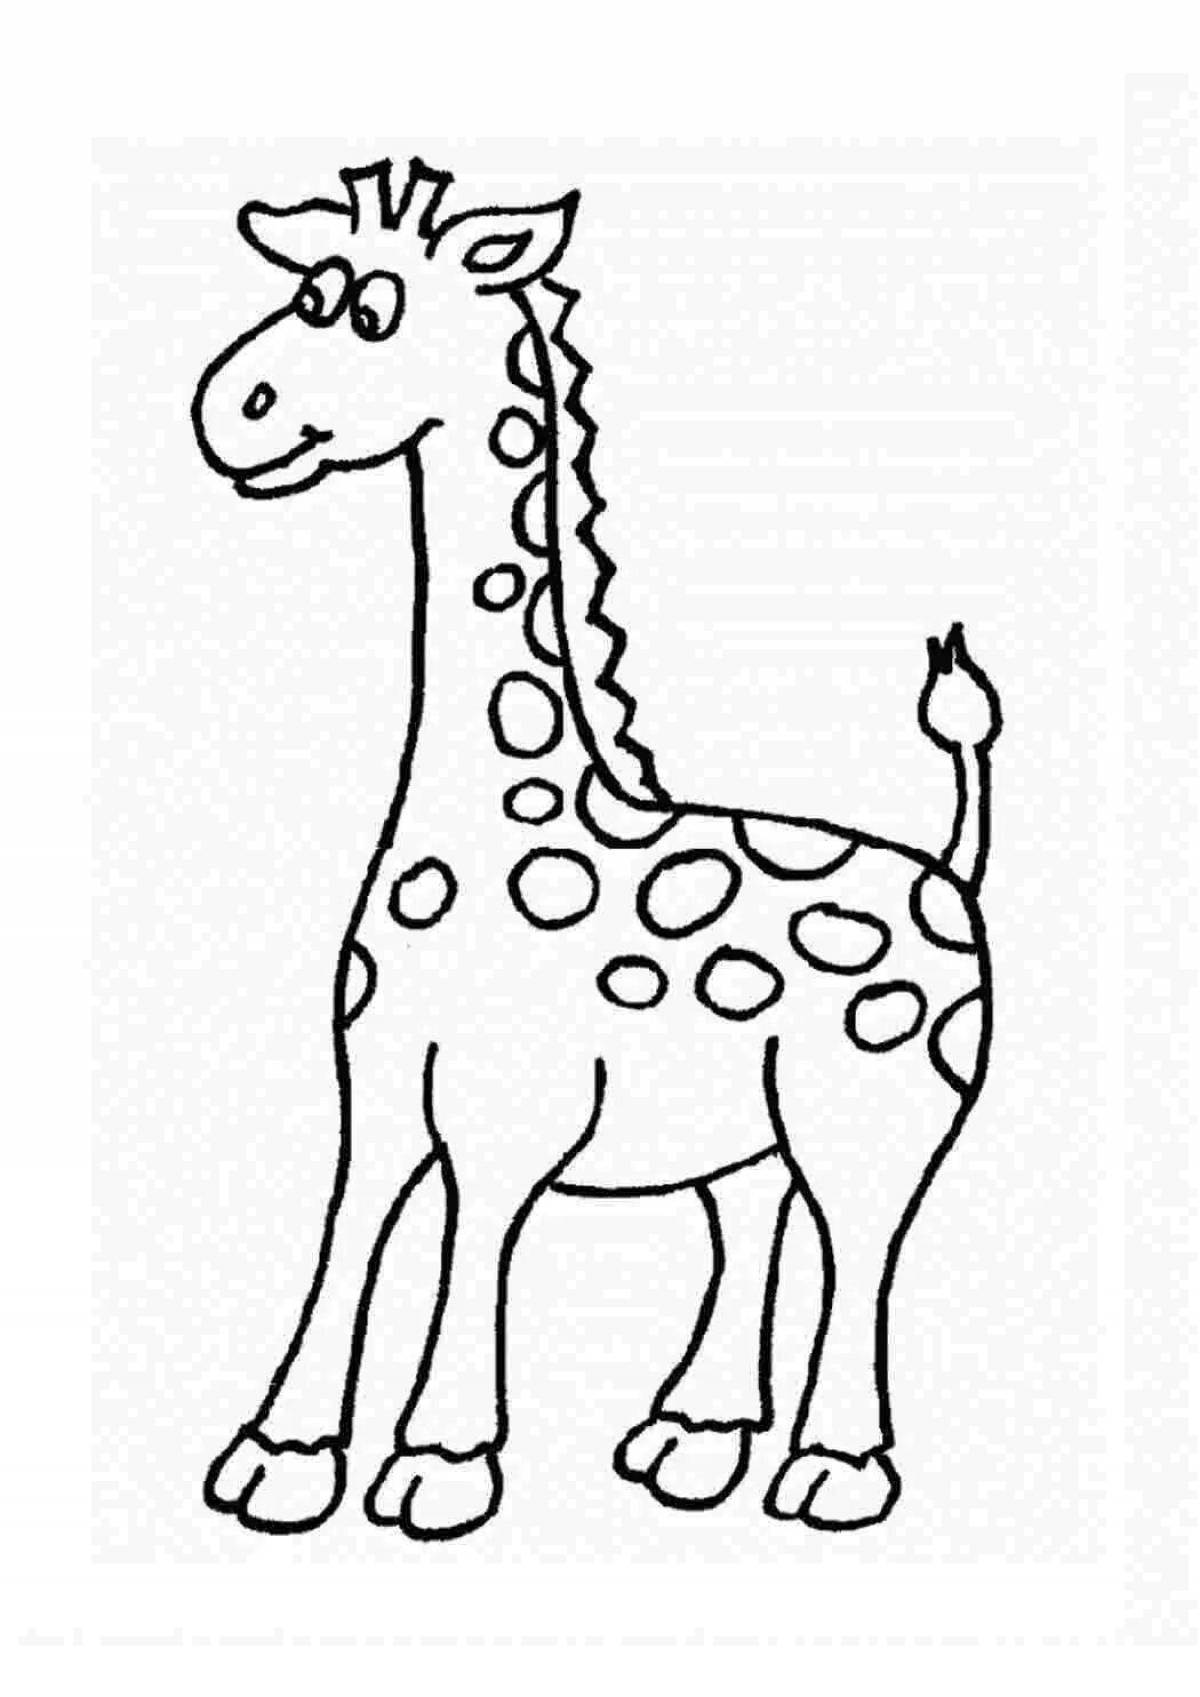 Jolly giraffe adopt mi ​​coloring page